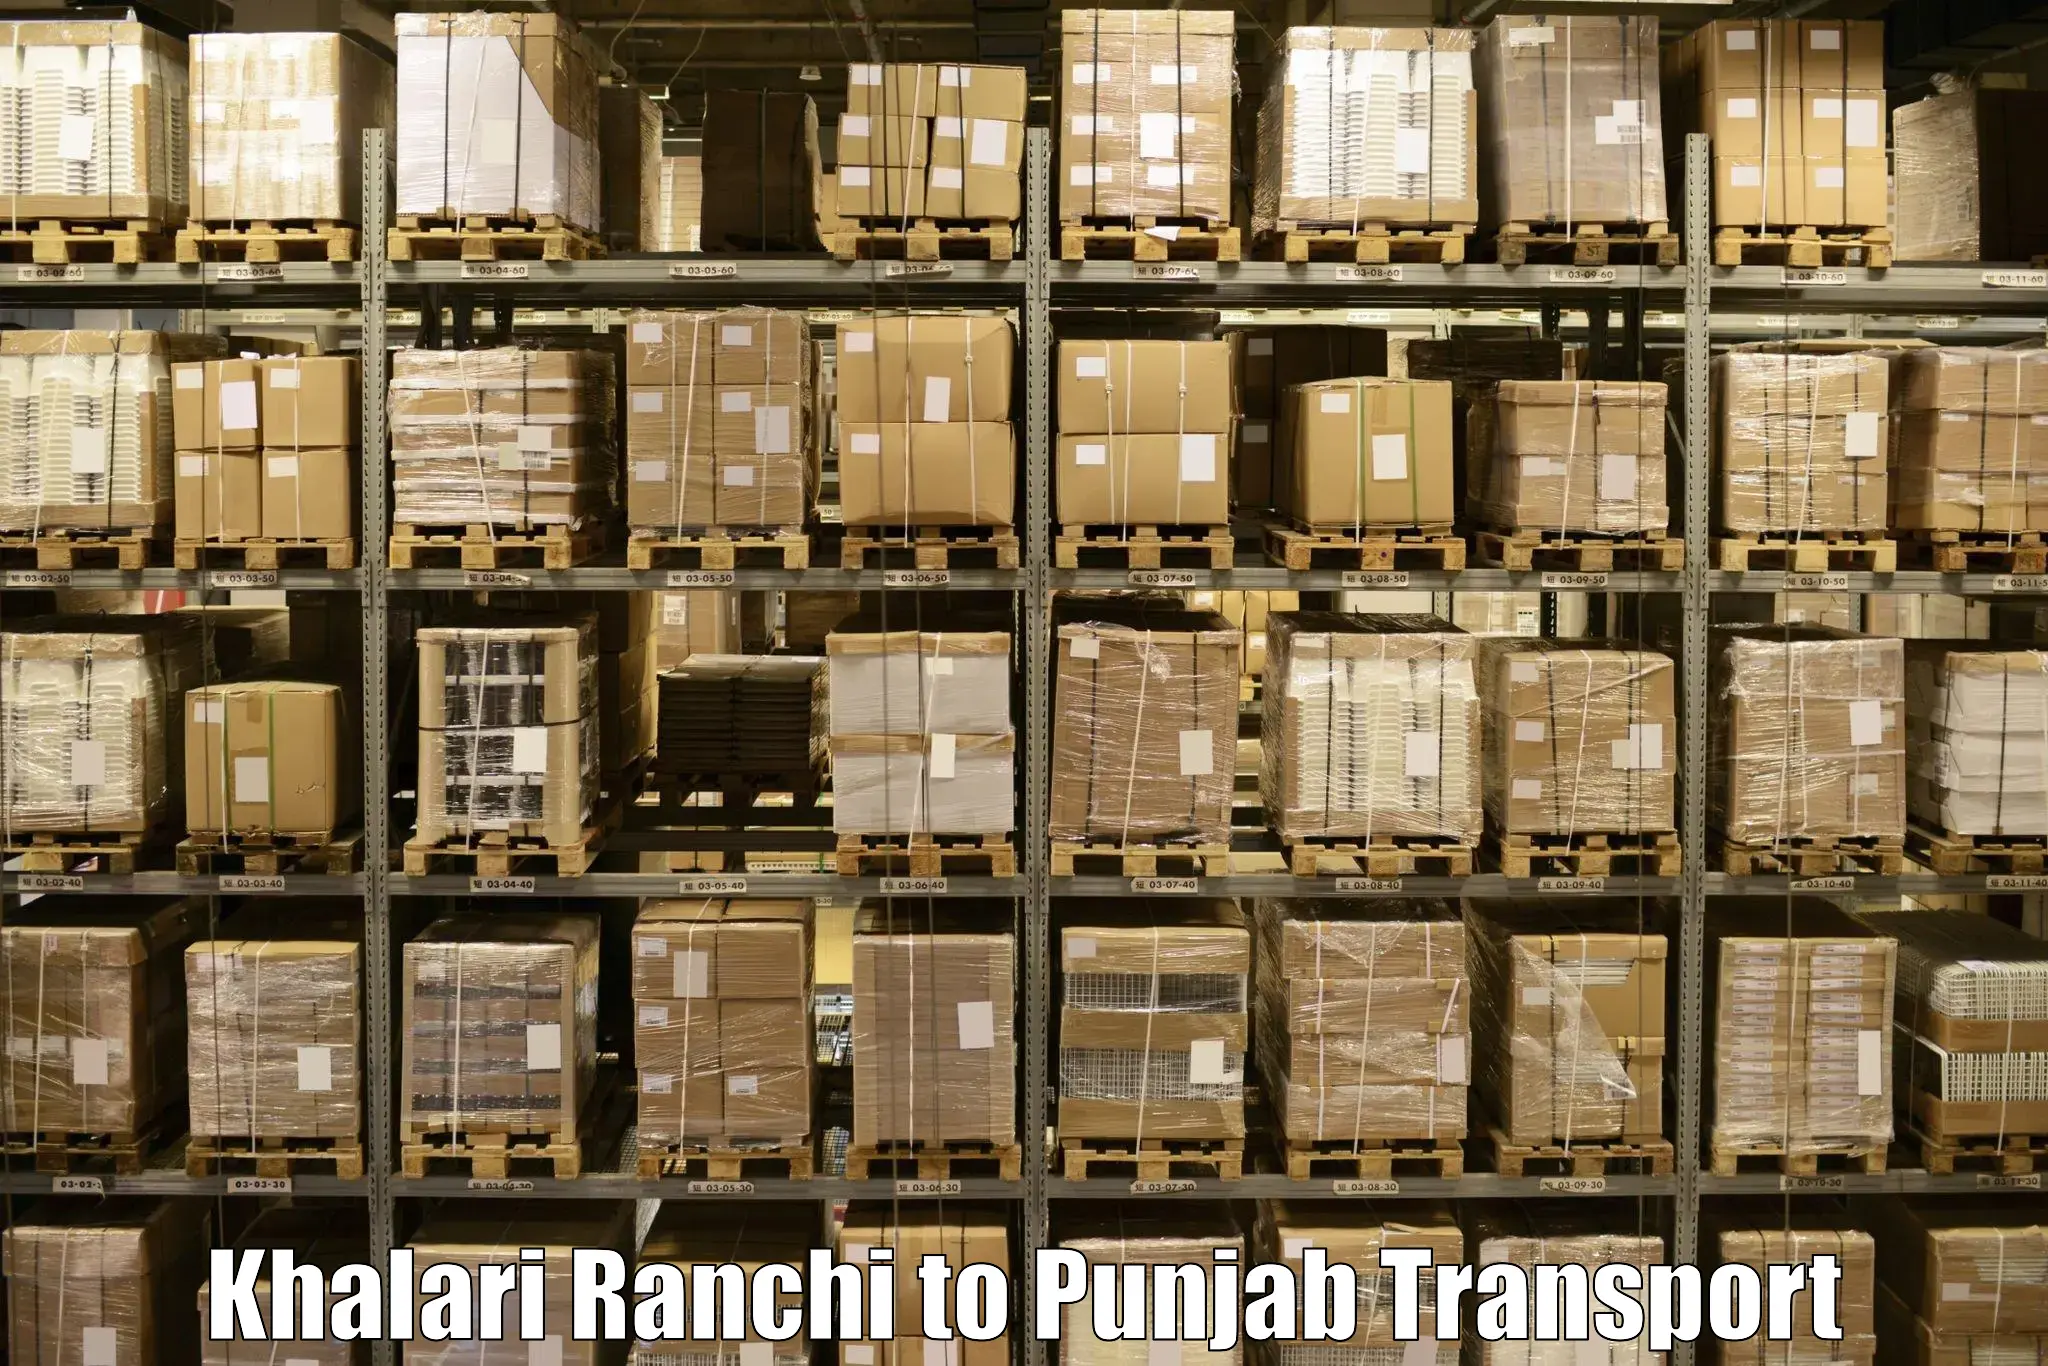 Bike shipping service Khalari Ranchi to Mohali